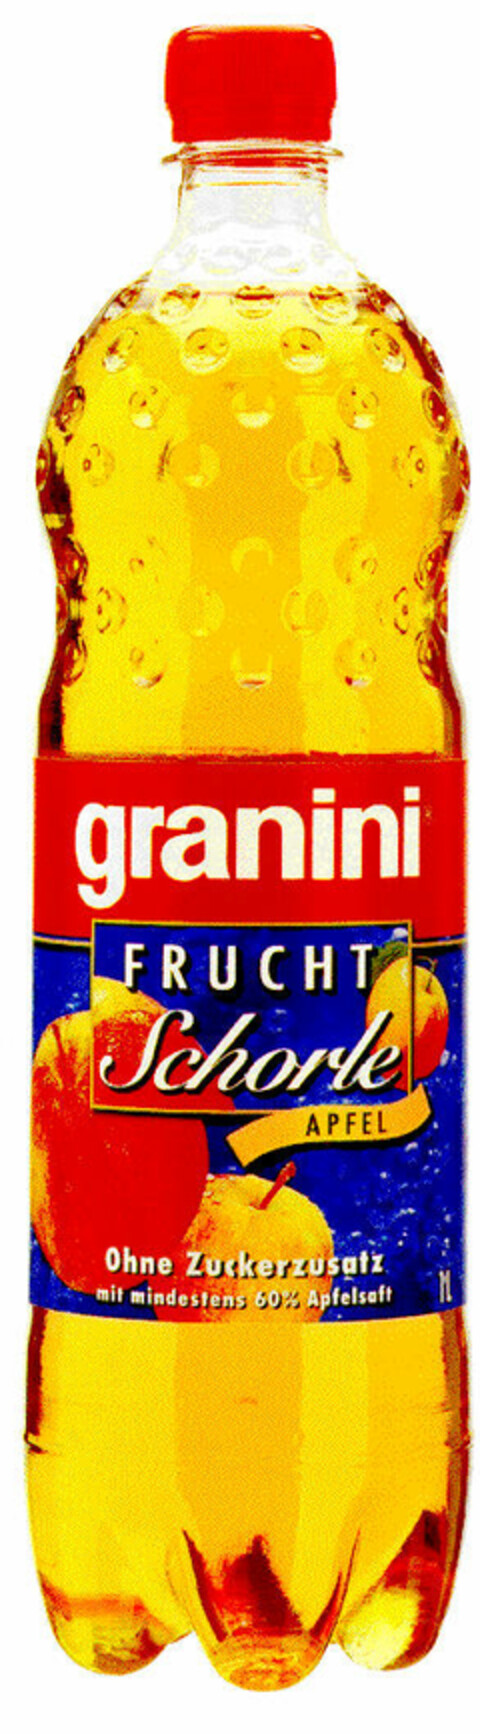 granini FRUCHT Schorle APFEL Logo (DPMA, 11/05/1999)